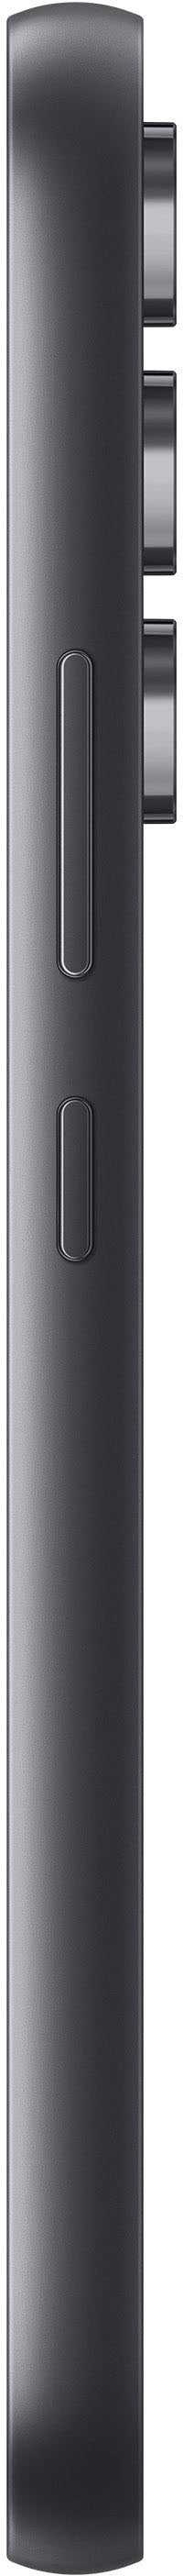 Samsung - Galaxy A54 5G 128GB - Awesome Graphite (Verizon)_1